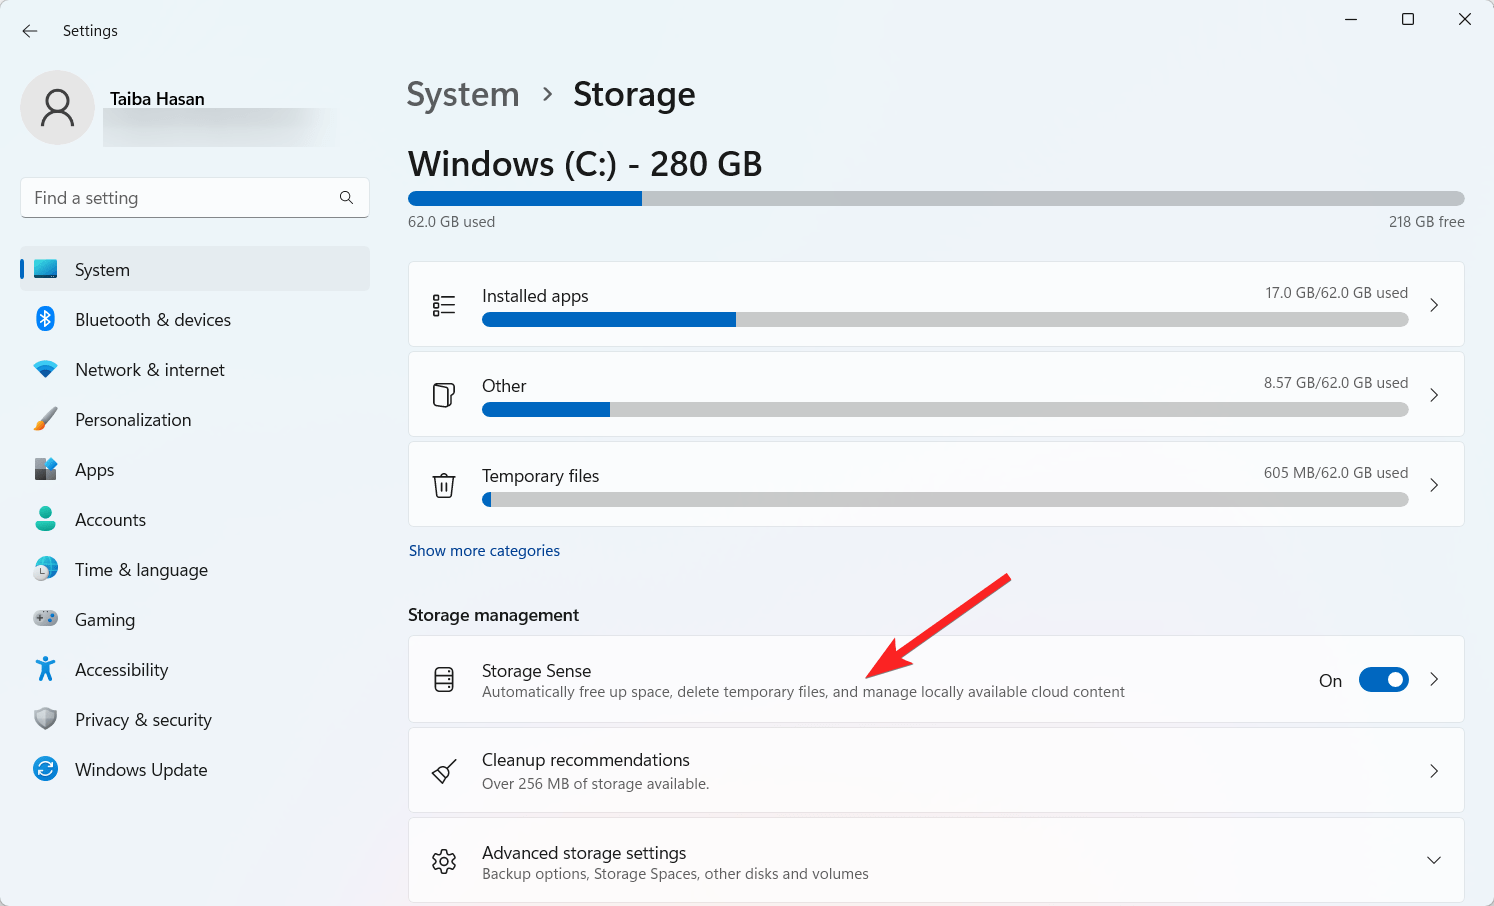 Select the Storage Sense option